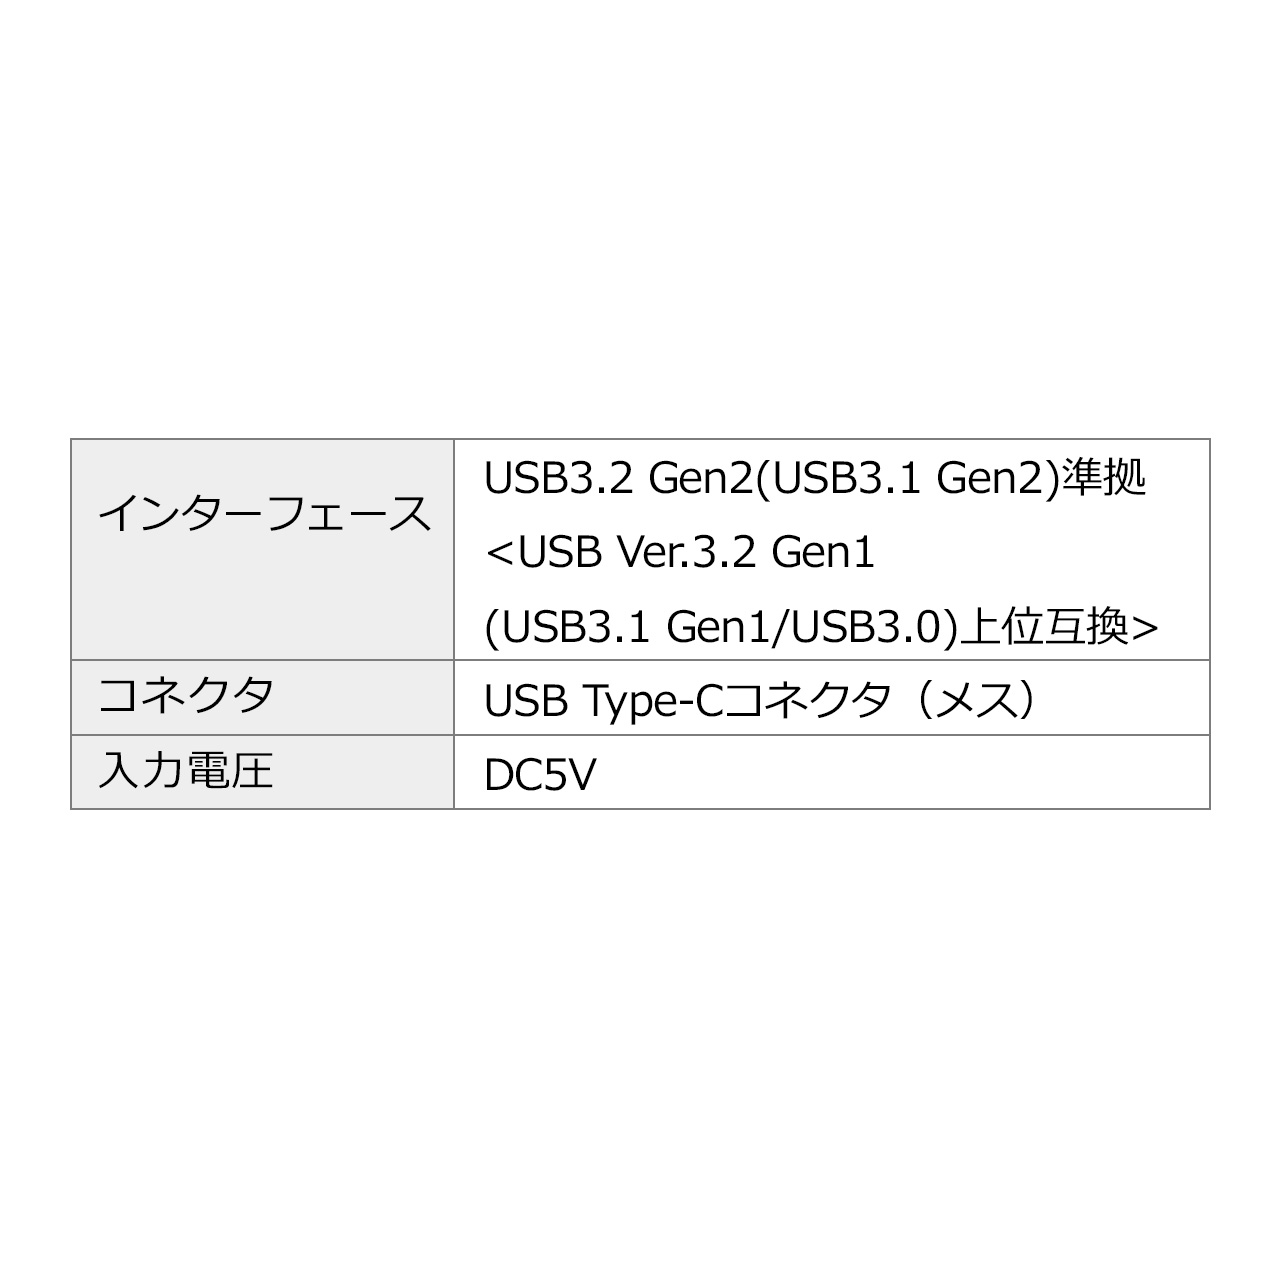 |[^uSSD Ot USB3.2 Gen2 1TB  őǂݍݑx540MB/s ^ er^ PS5/PS4/Xbox Series X Type-A/Type-C 600-USSDS1TB